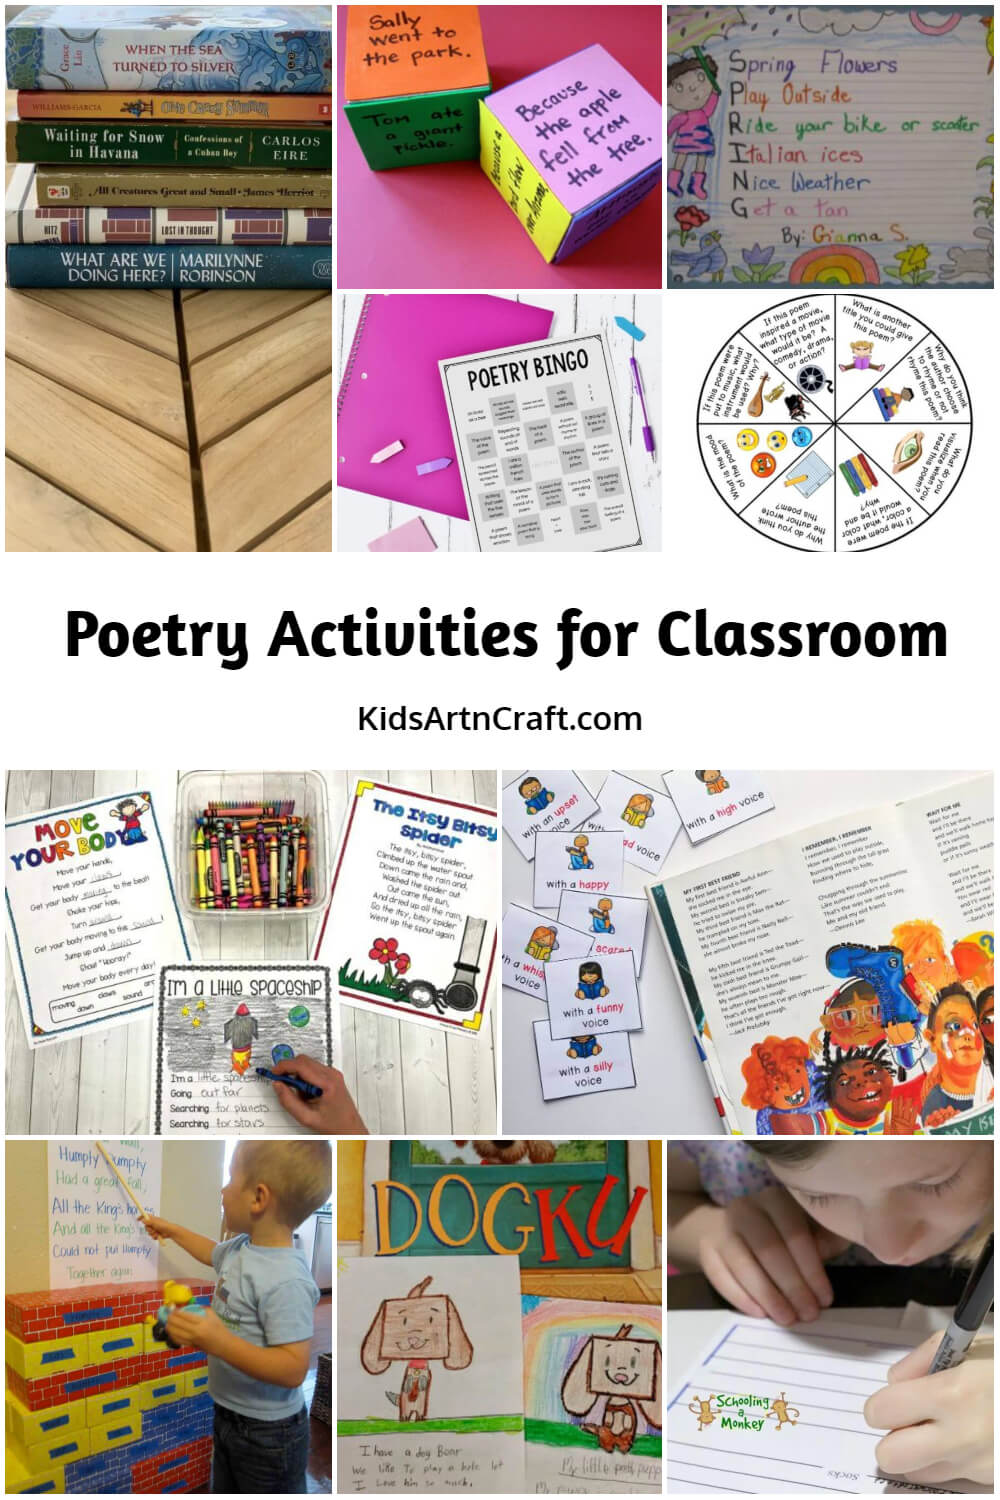 Poetry Activities for Classroom